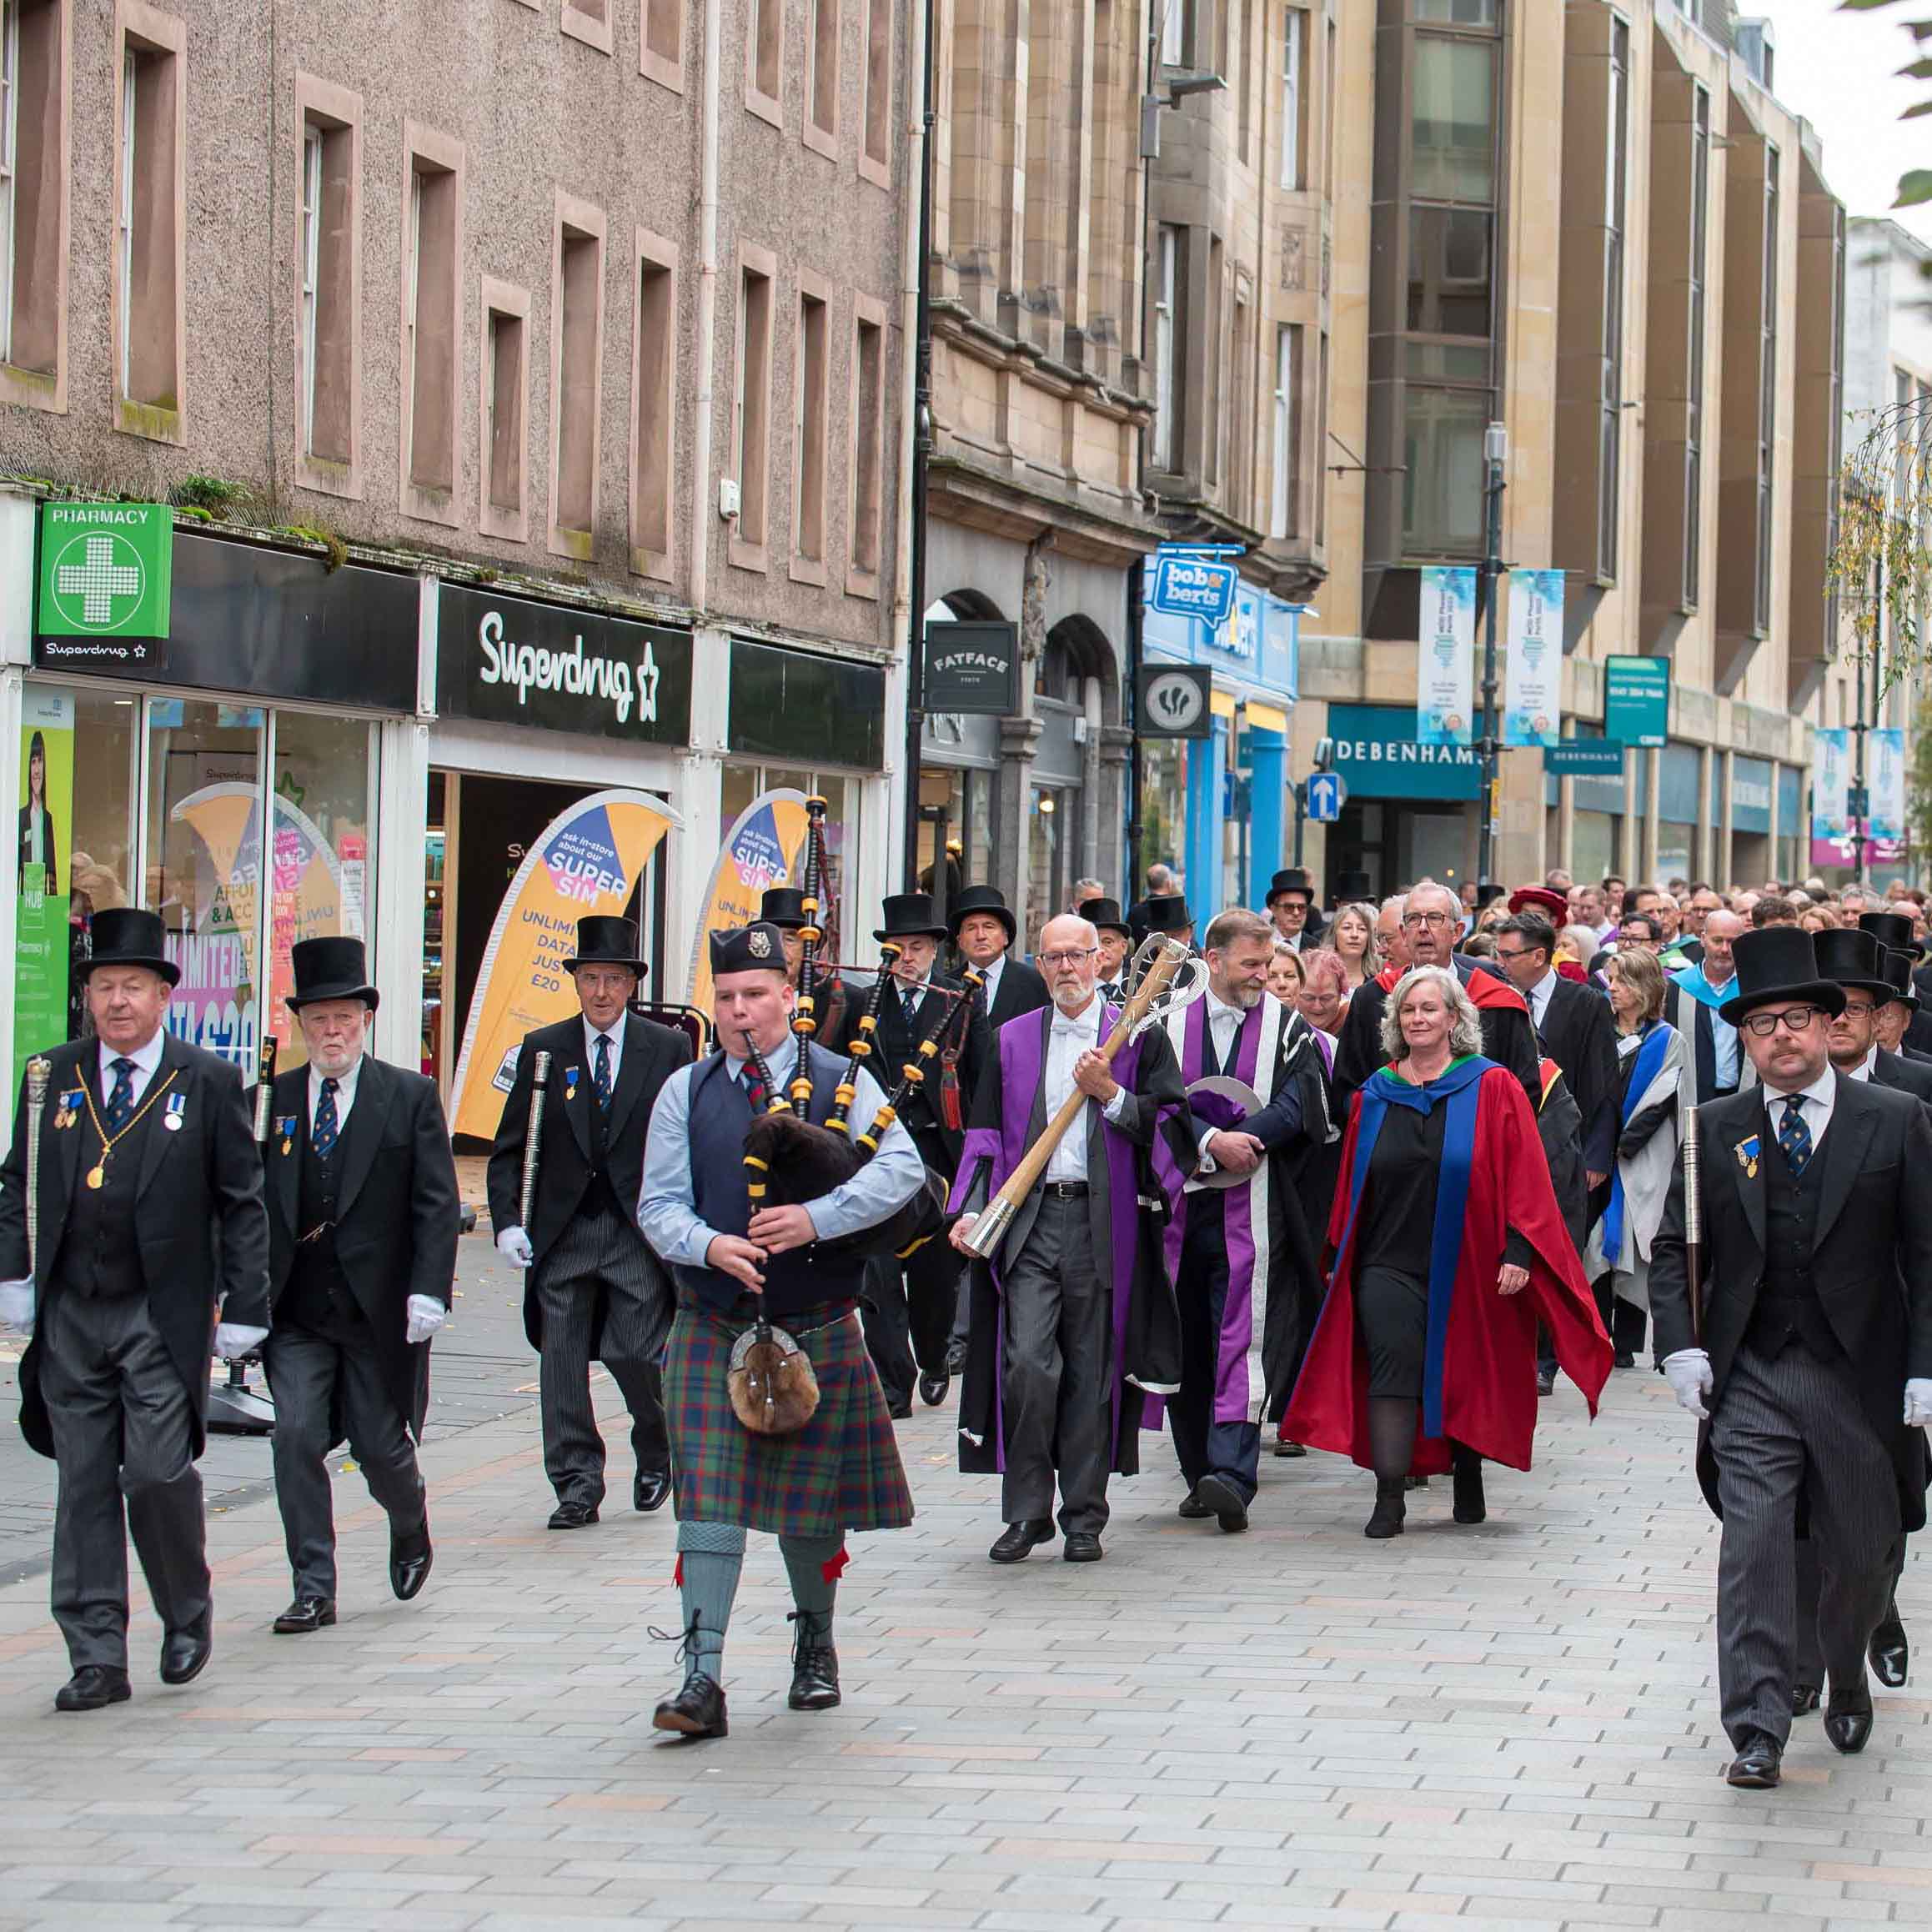 Graduation procession through Perth